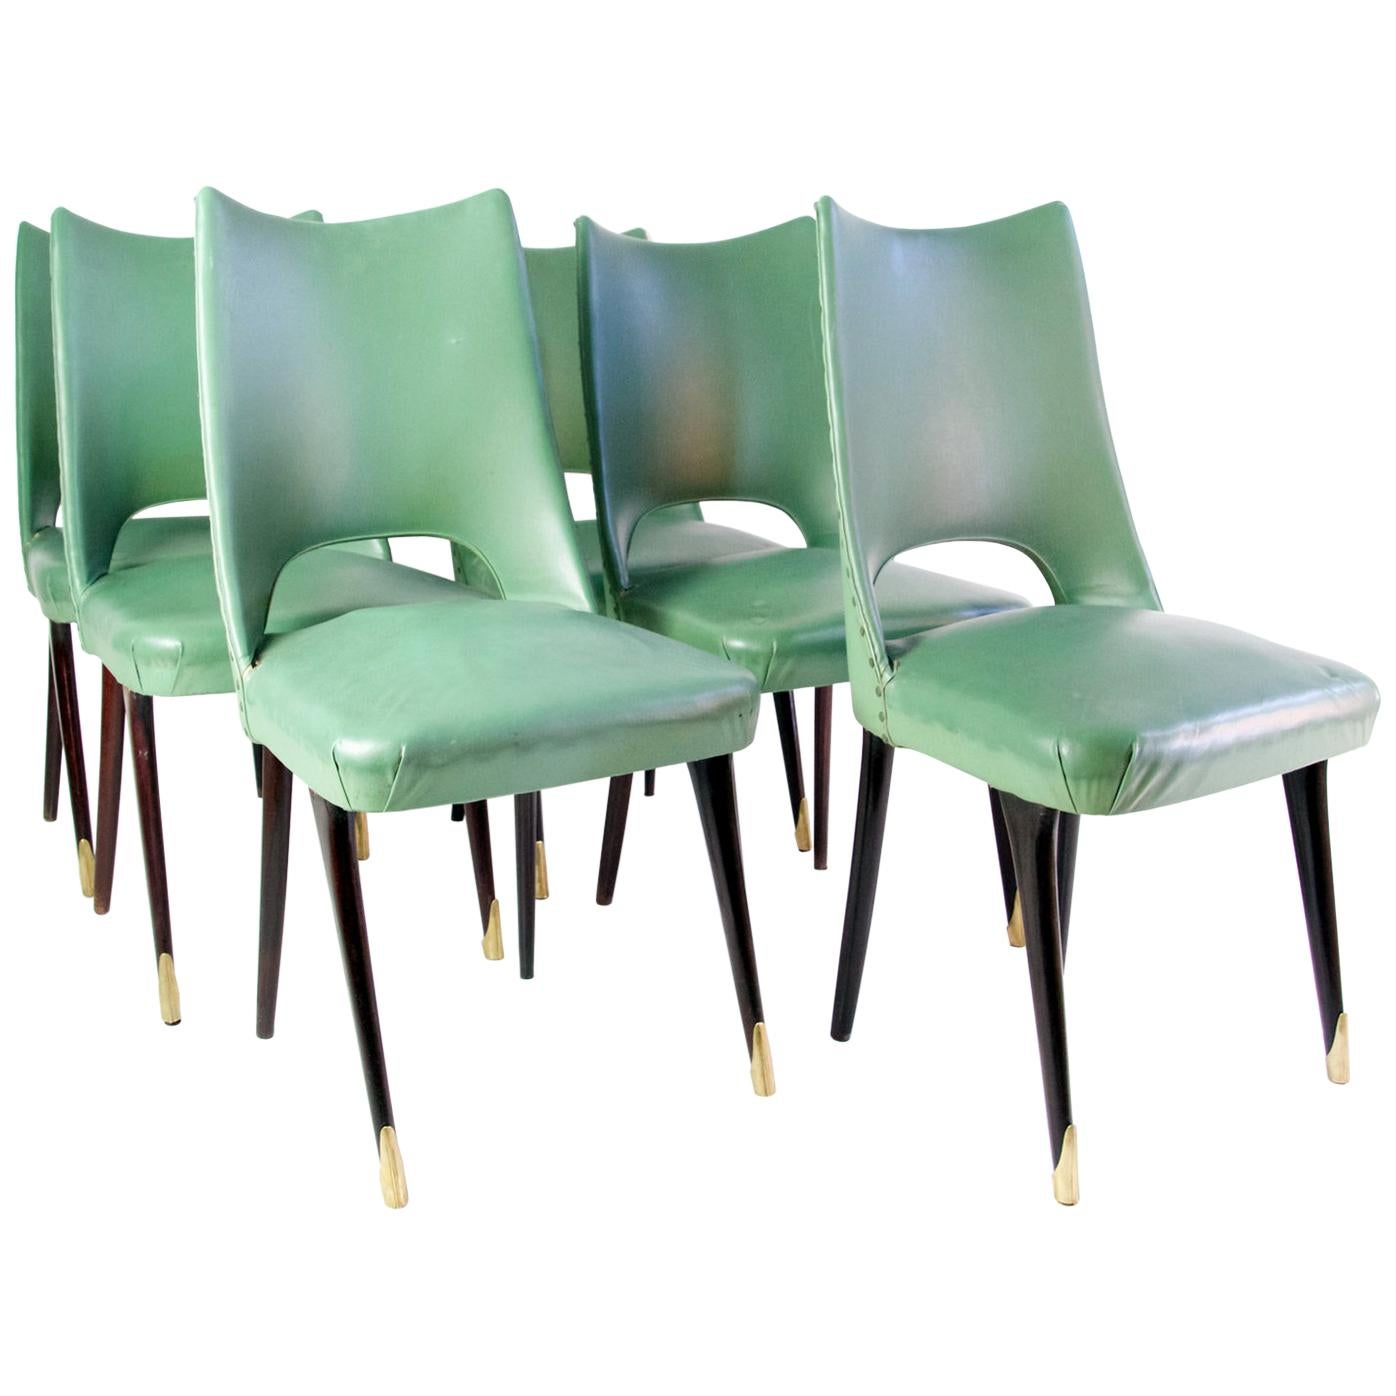 Six Midcentury Italian Dining Chairs